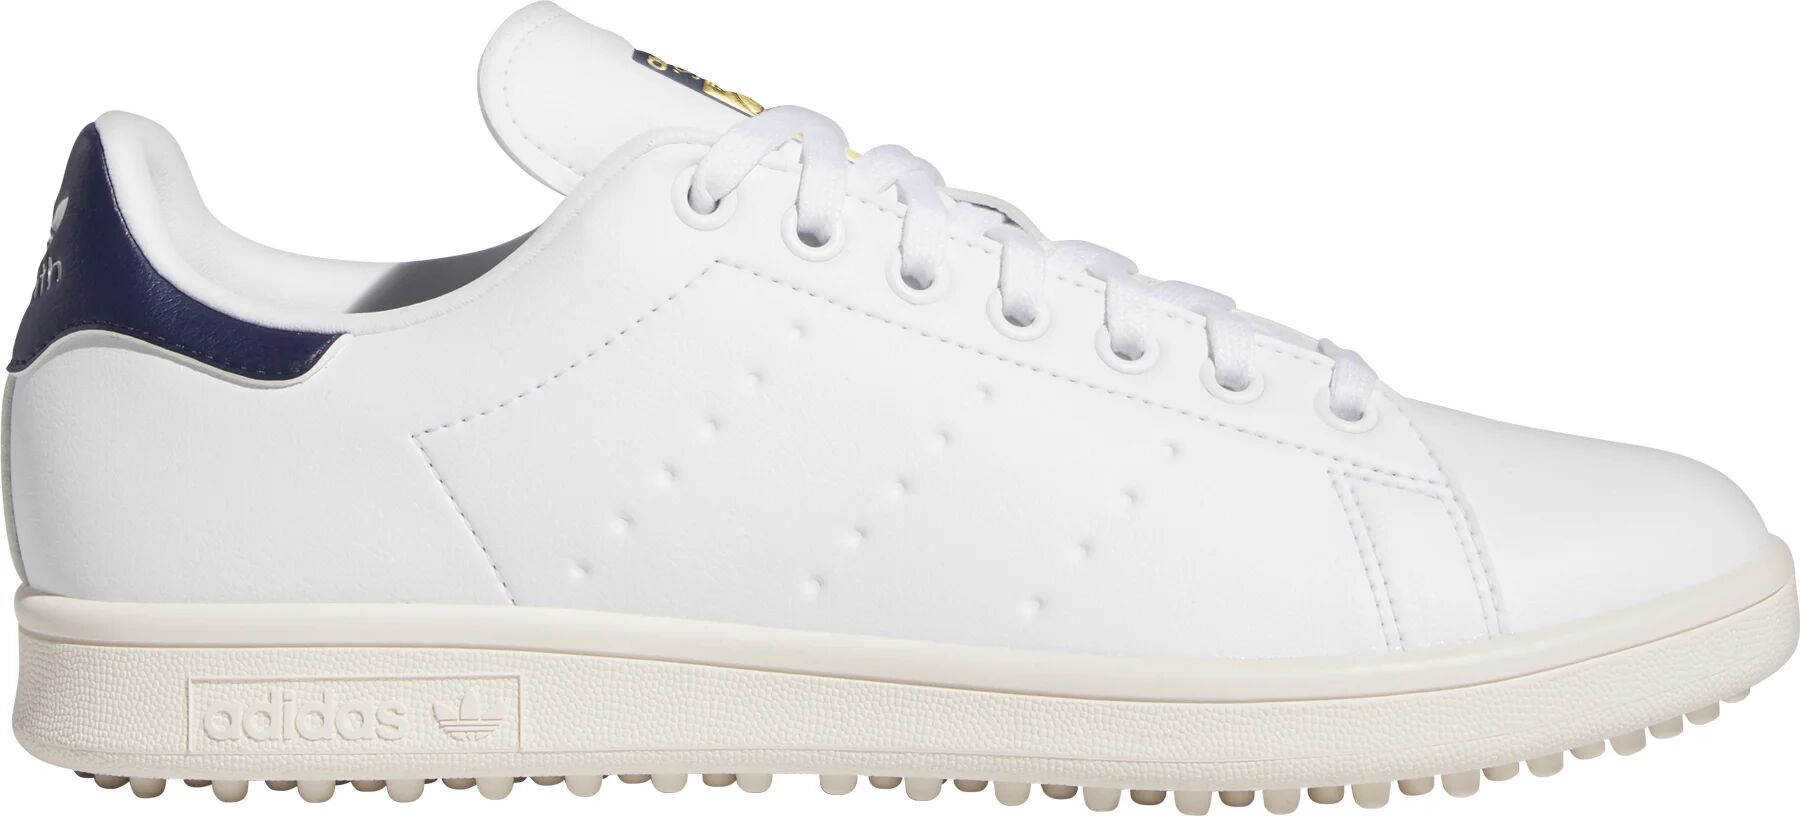 adidas Stan Smith Golf Shoes - Cloud White/Collegiate Navy/Off White - 11.5 - MEDIUM